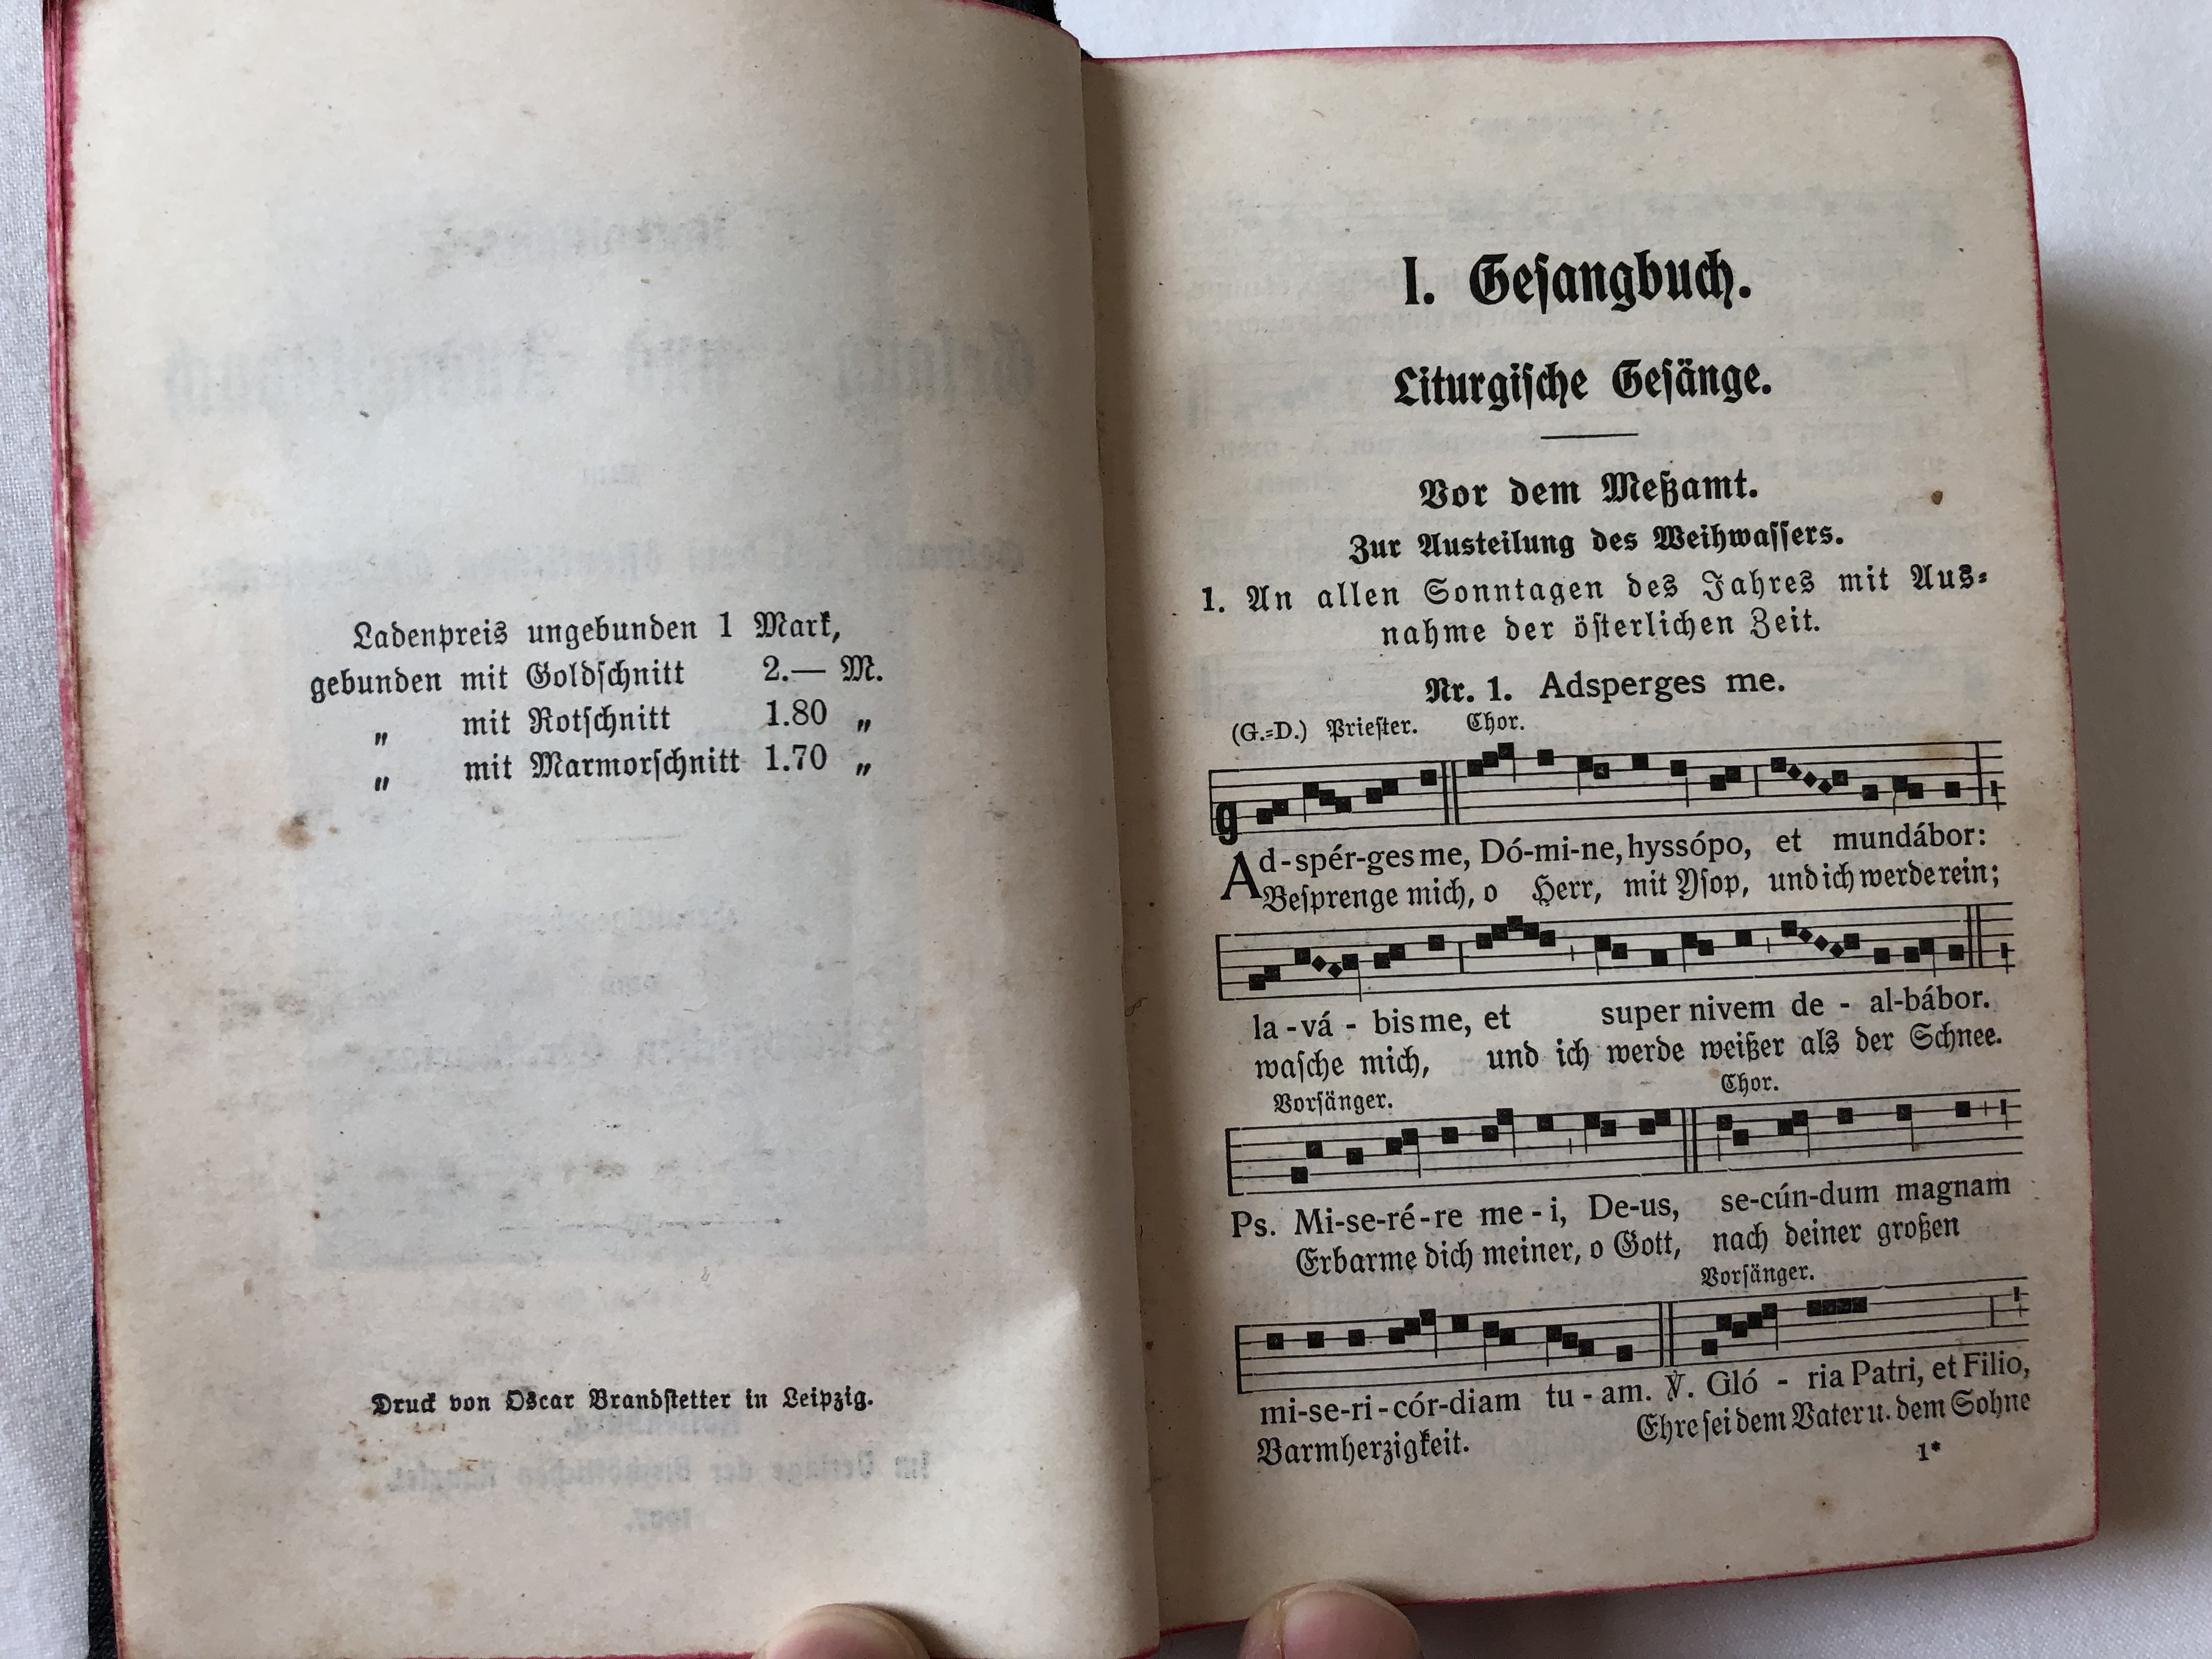 katoliches-gesang-und-andachtsbuch-german-language-catholic-song-and-prayerbook-for-use-in-common-worship-bisch-flichen-kanzlei-rottenburg-antique-german-book-hardcover-1907-5-.jpg